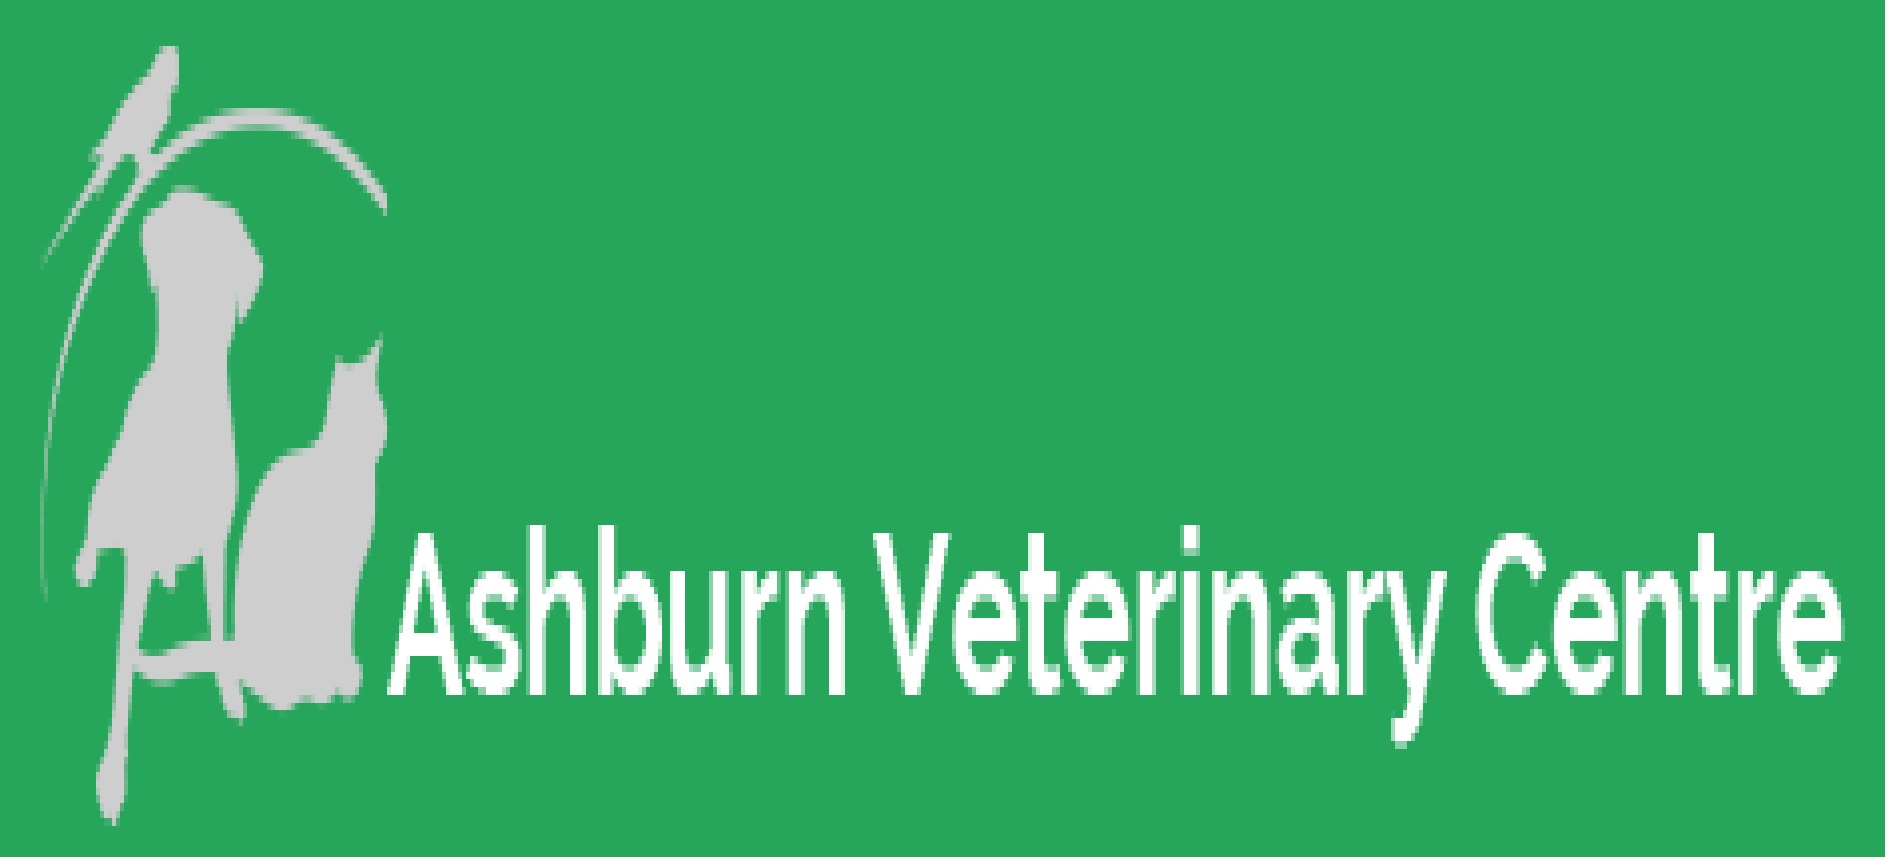 http://ashburnveterinarycentre.co.uk/ logo